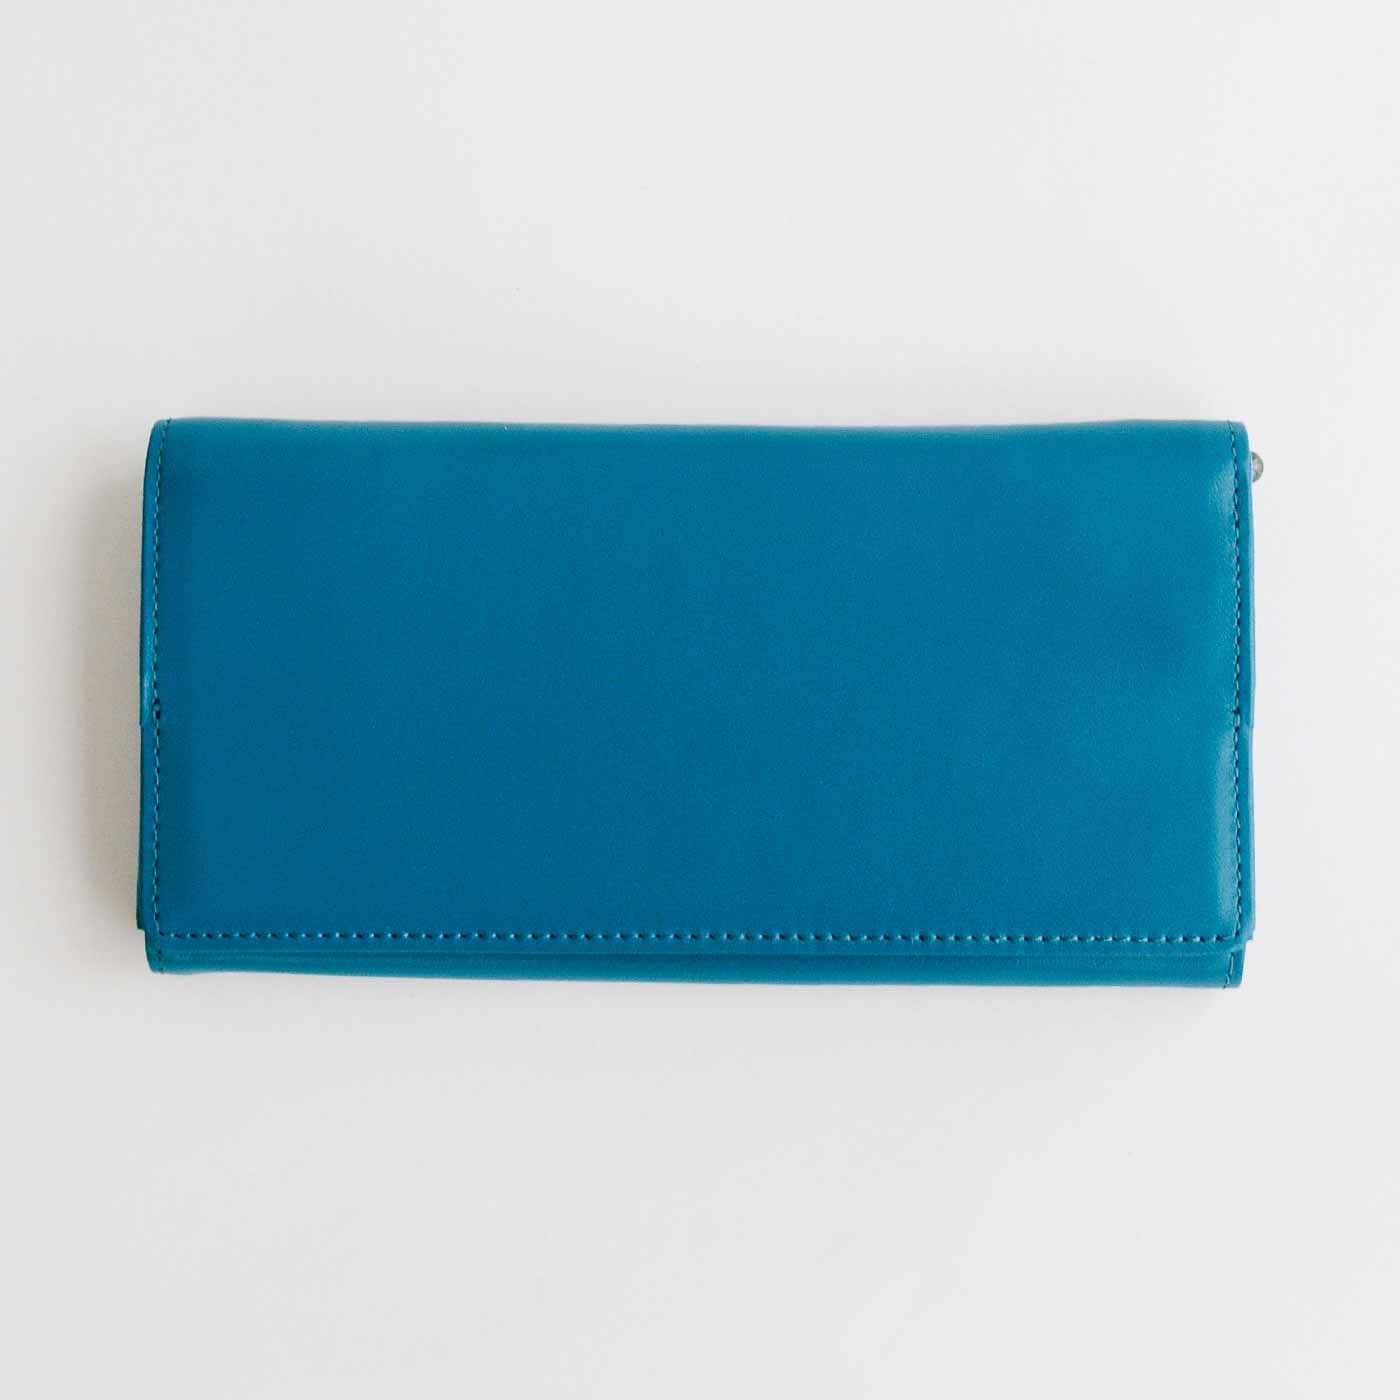 ＆Stories|職人仕上げの馬革ギャルソン財布〈ターコイズ色〉[本革 財布：日本製]|美しいターコイズ色をイメージして馬革。財布正面も上品な仕上がり。